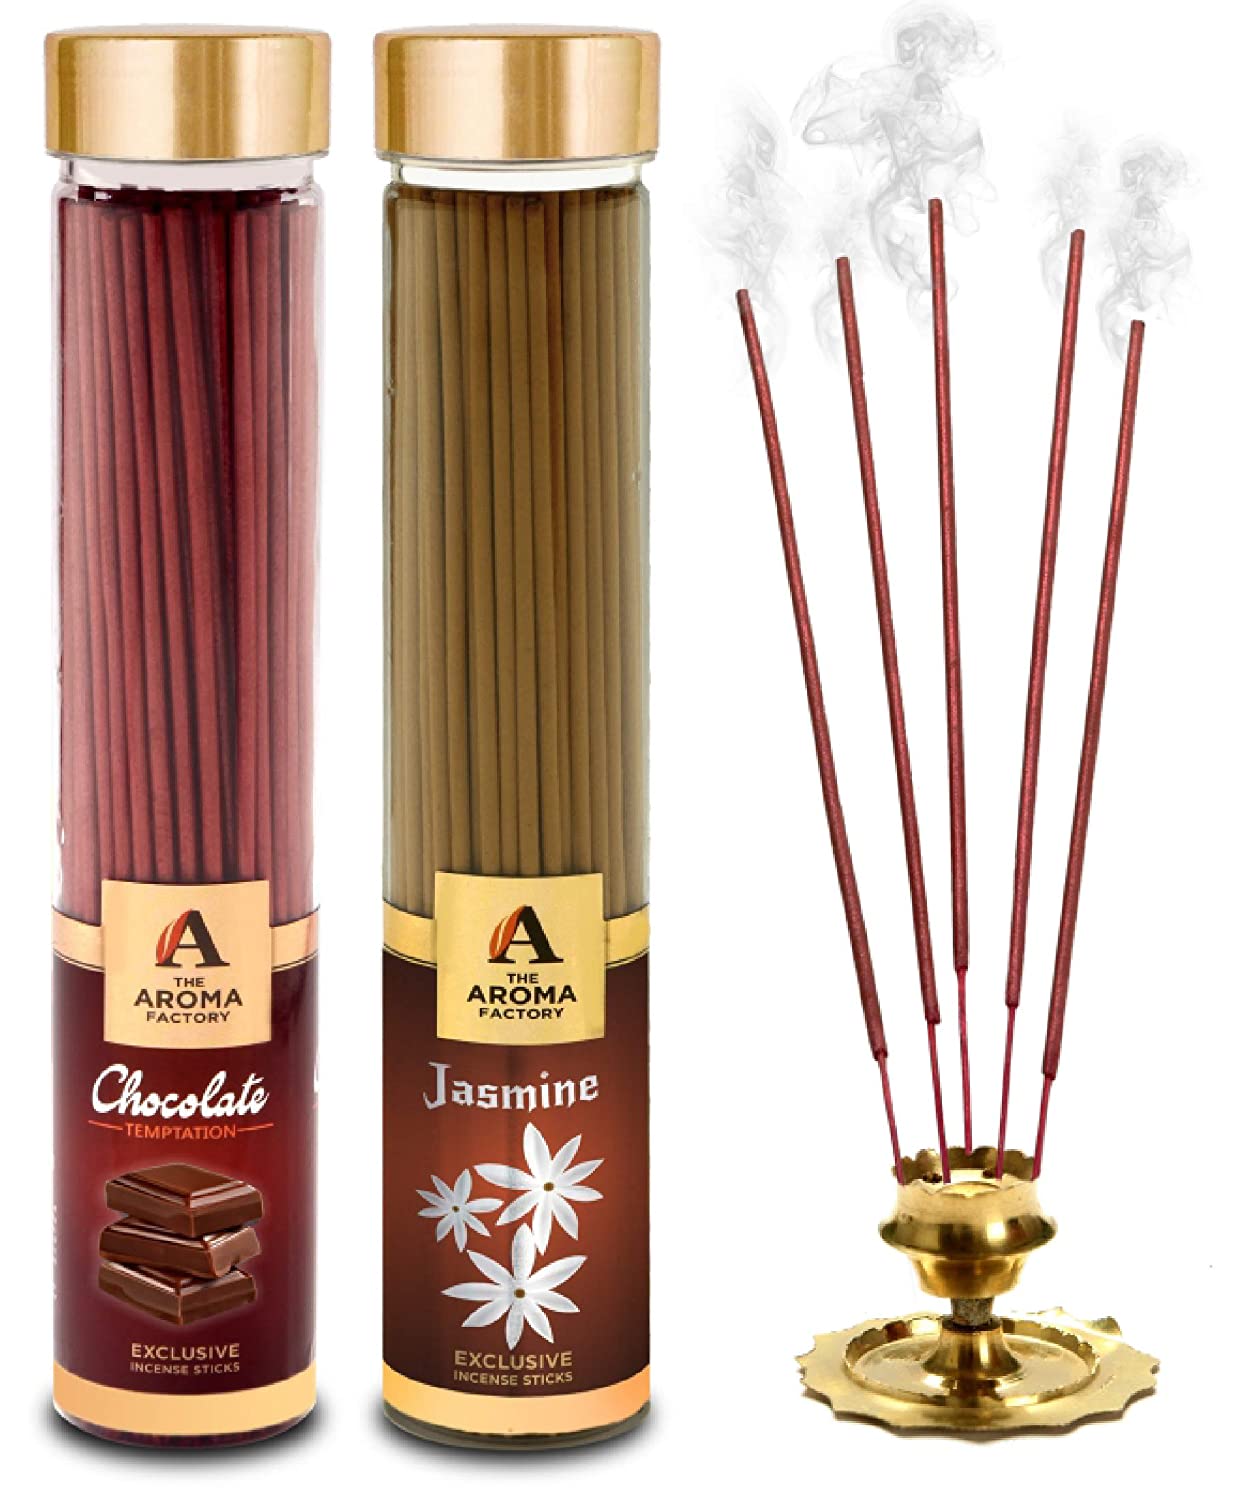 The Aroma Factory Chocolate & Jasmine Agarbatti (Charcoal Free & Low Smoke) Bottle Pack of 2 x 100